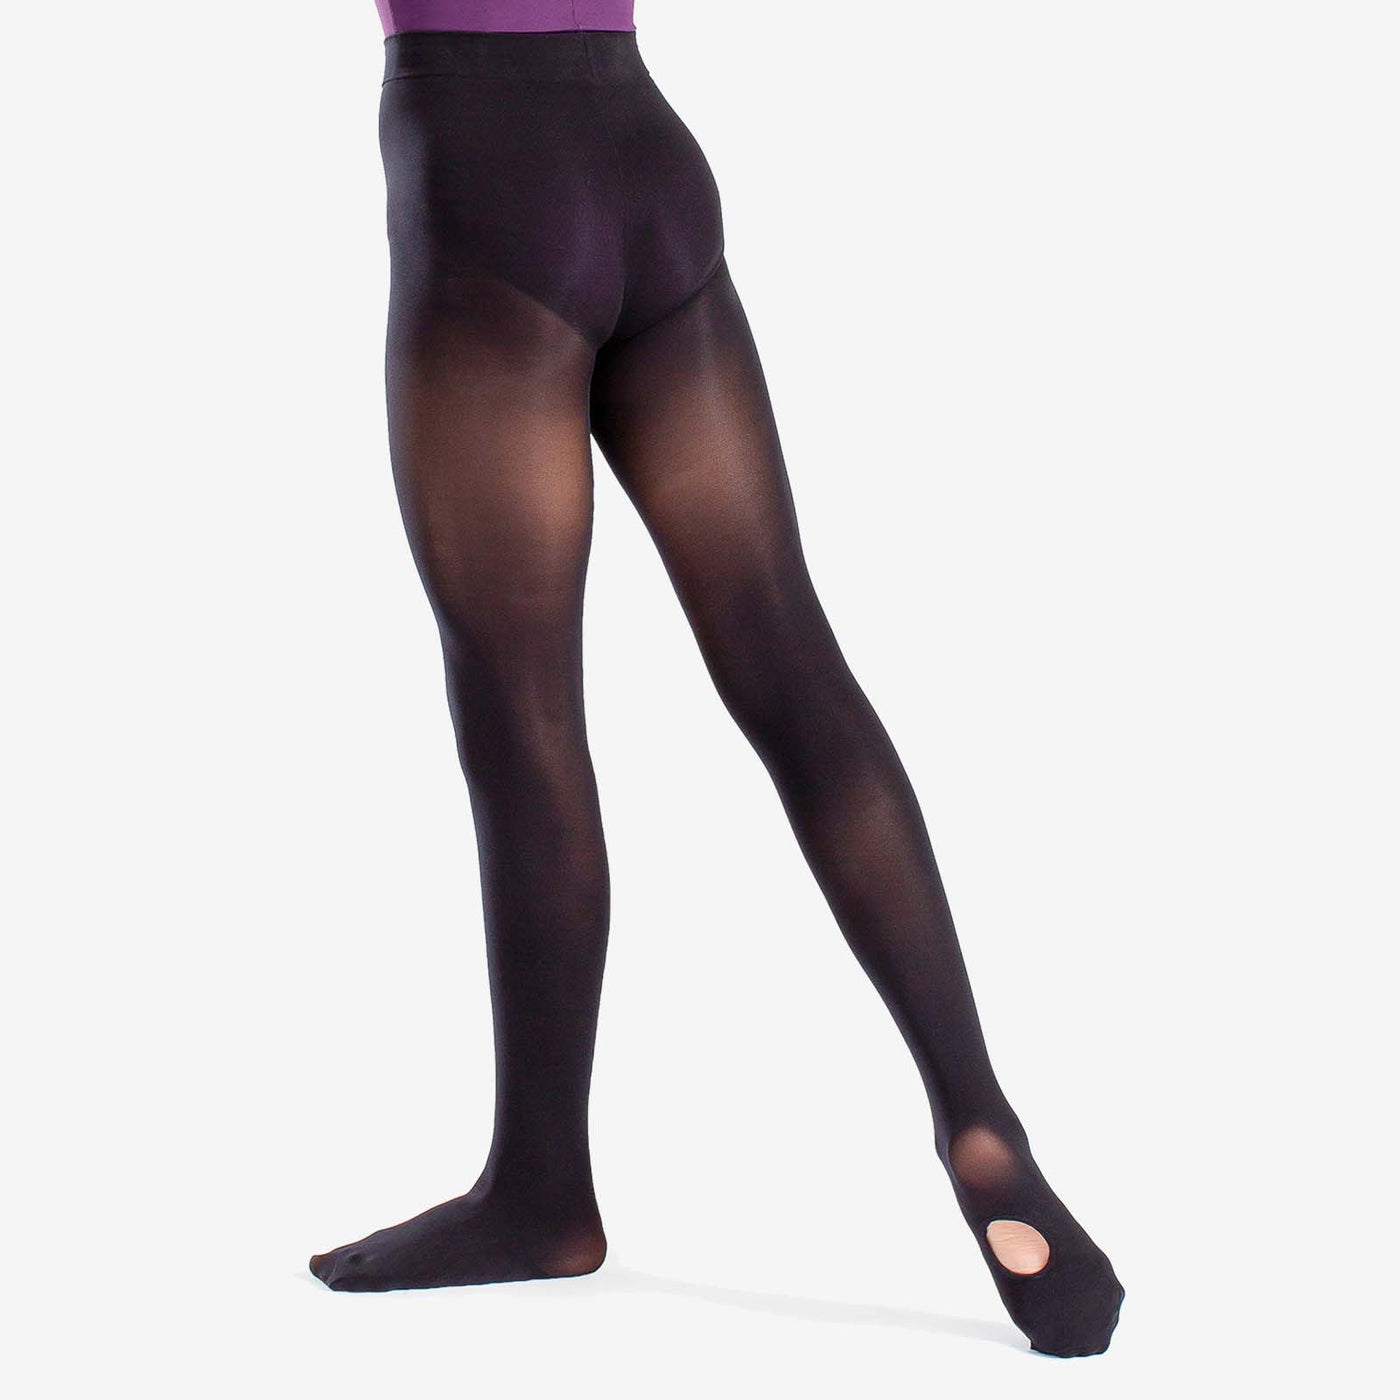 Convertible Dark Tan Child Size MC LC Dance Tights Pantyhose Velvet  Microfiber Stocking Legwear Ballet Jazz Ballerina Training